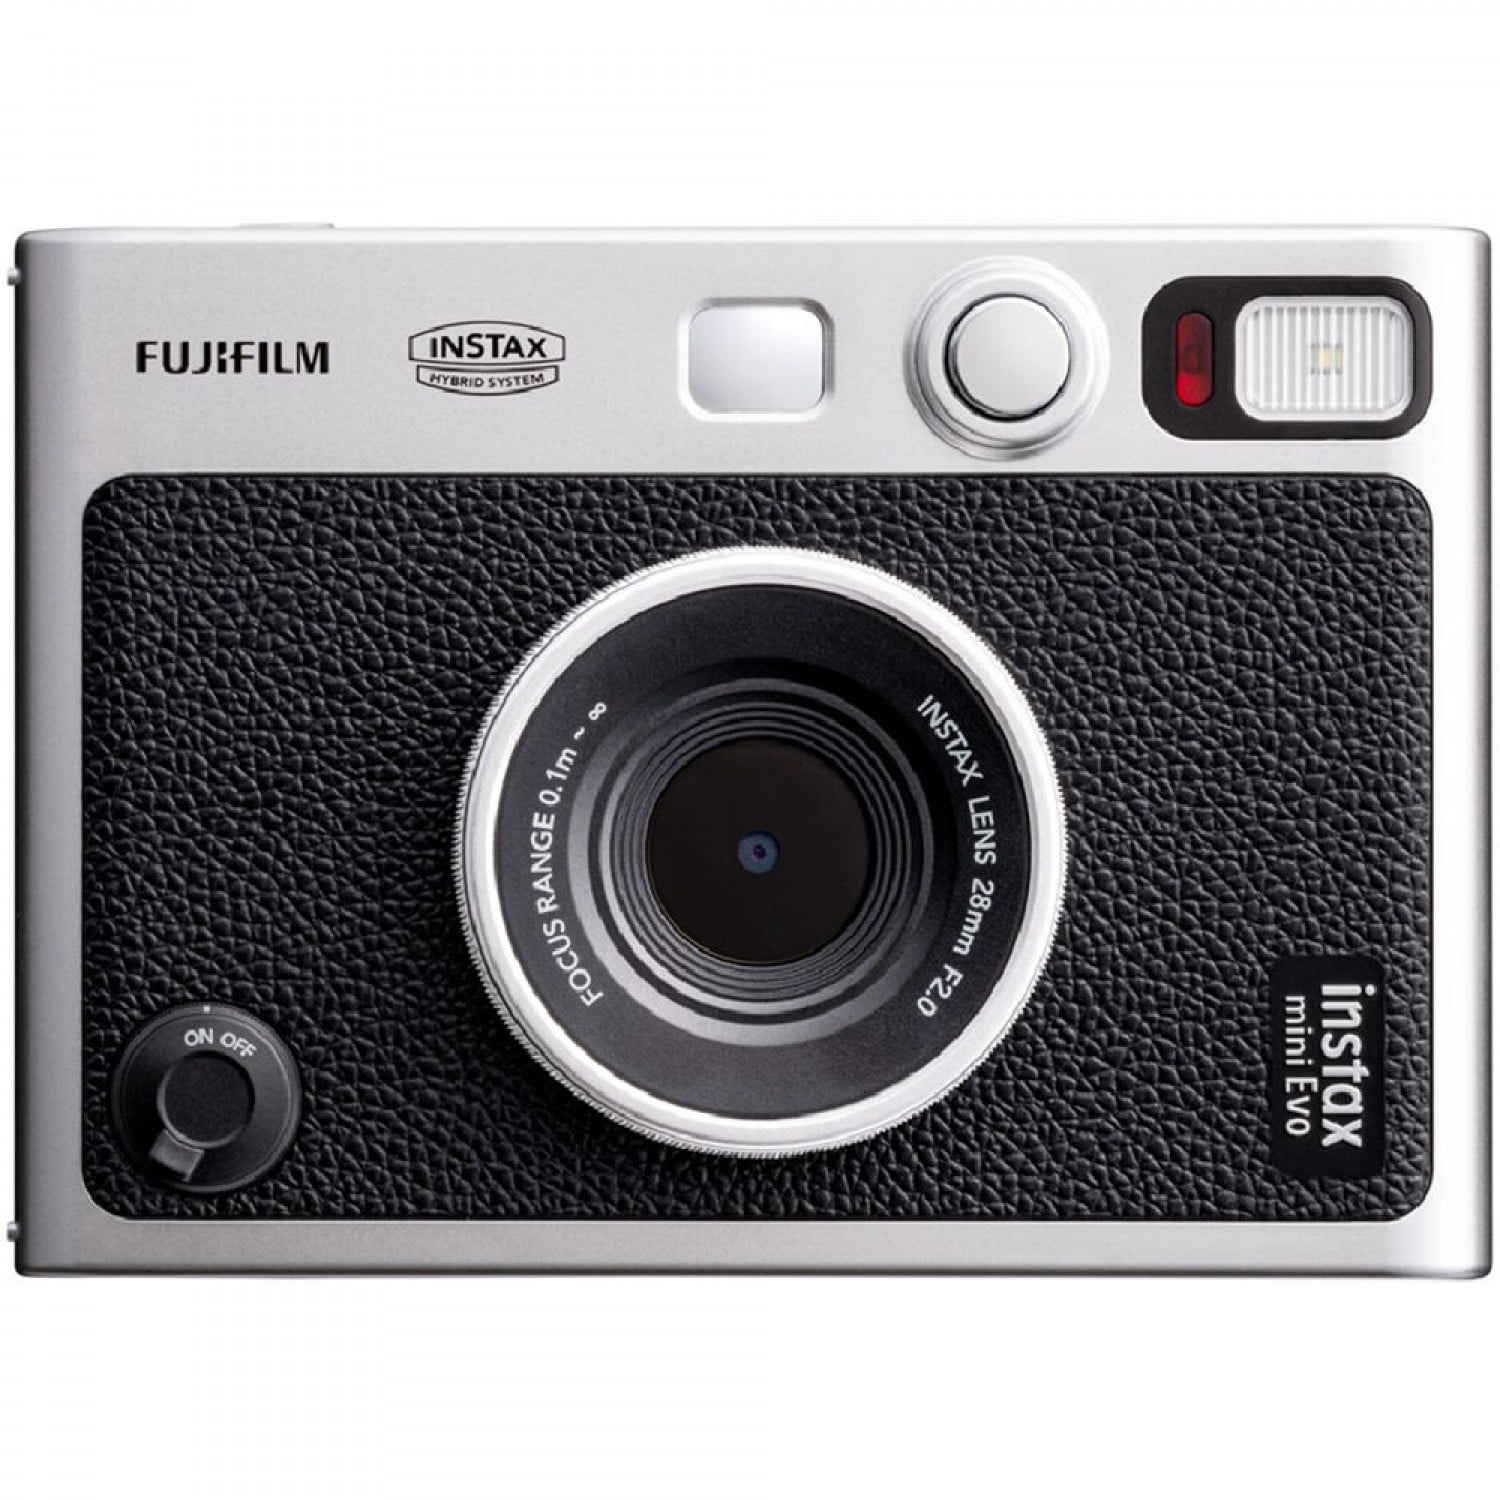 Fujifilm instax Mini Appareil Photo instantané 12, Exposition